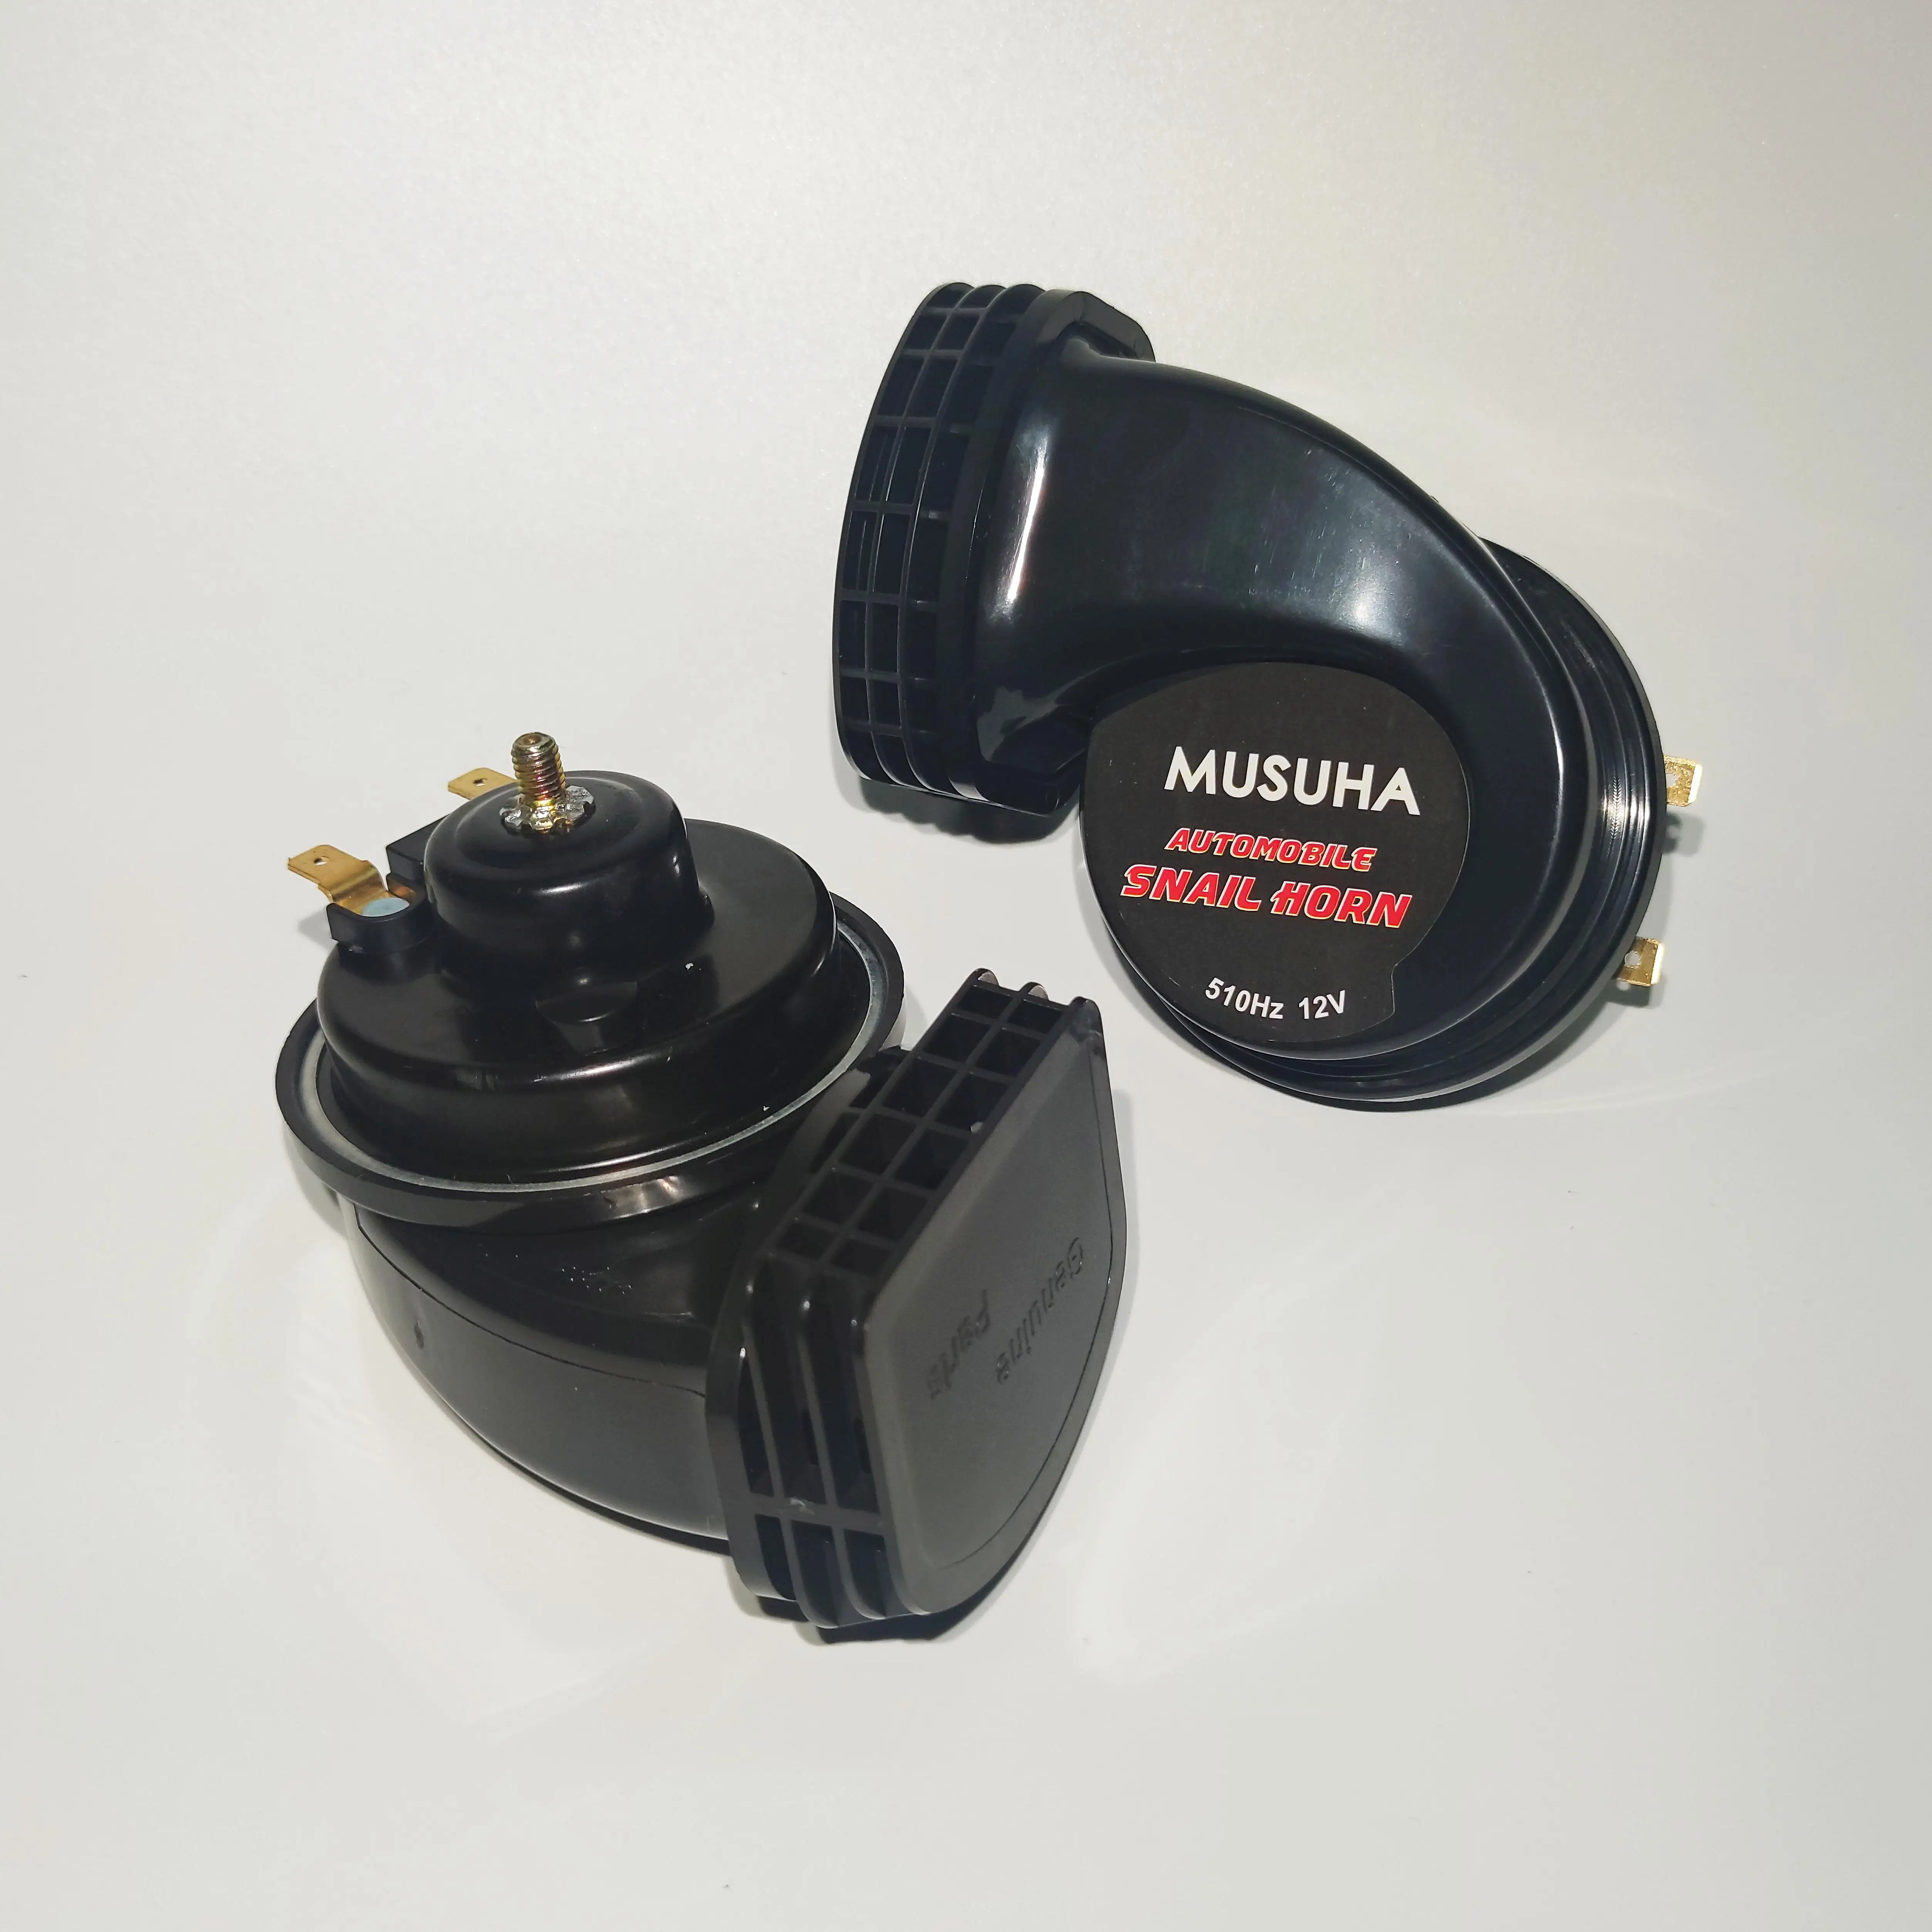 MUSUHA Loud Car Horn for car 12v For PIAA Type Horn Universal 118dB Waterproof Snail Horn Dual Tone Car Accessory MU-1202O1-2